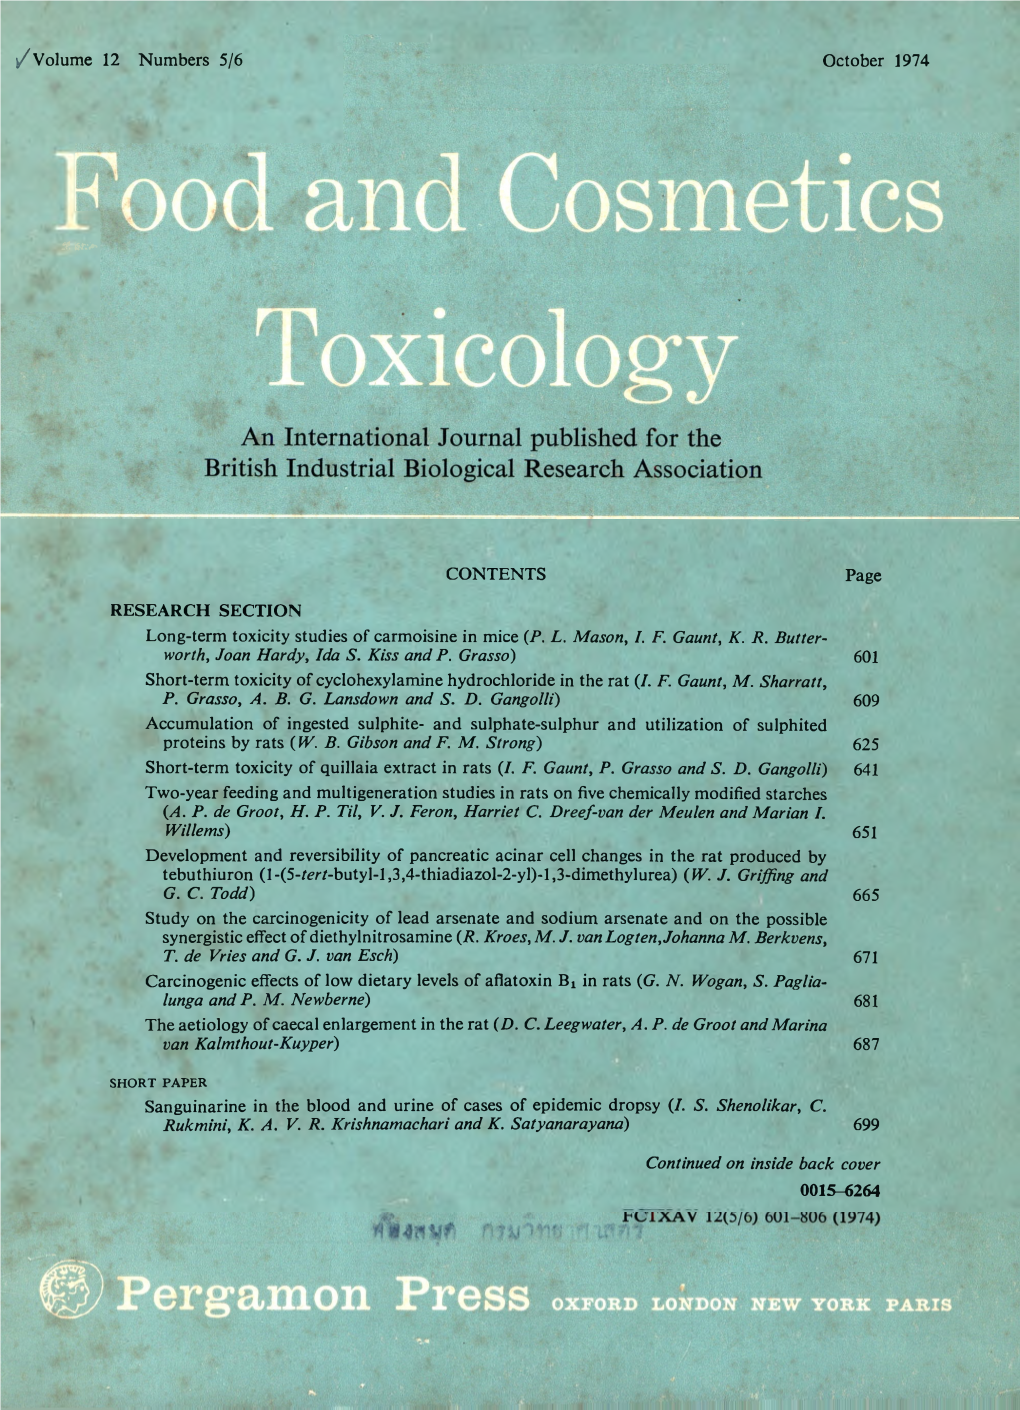 Food and Cosmetics Toxicology 1974 Vol.12 No.5-6